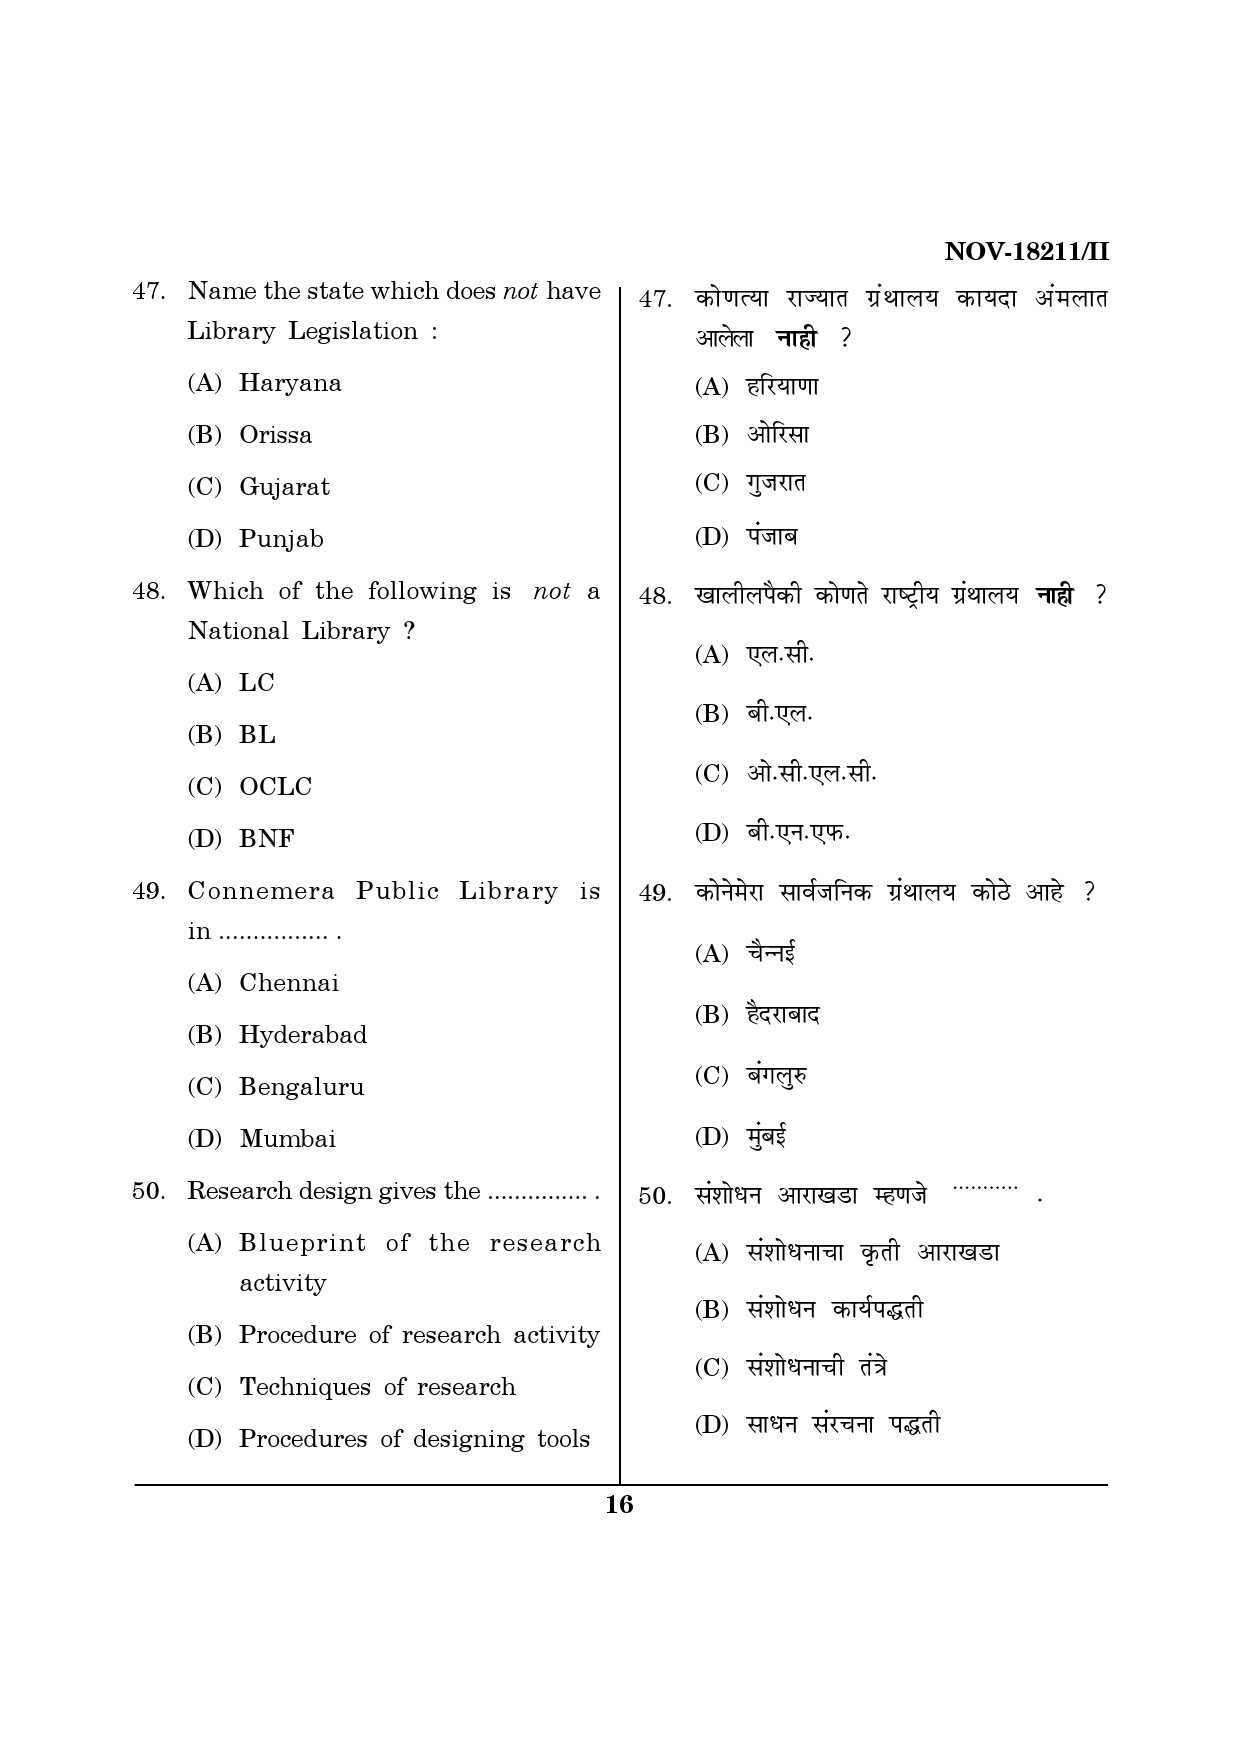 Maharashtra SET Library Information Science Question Paper II November 2011 16